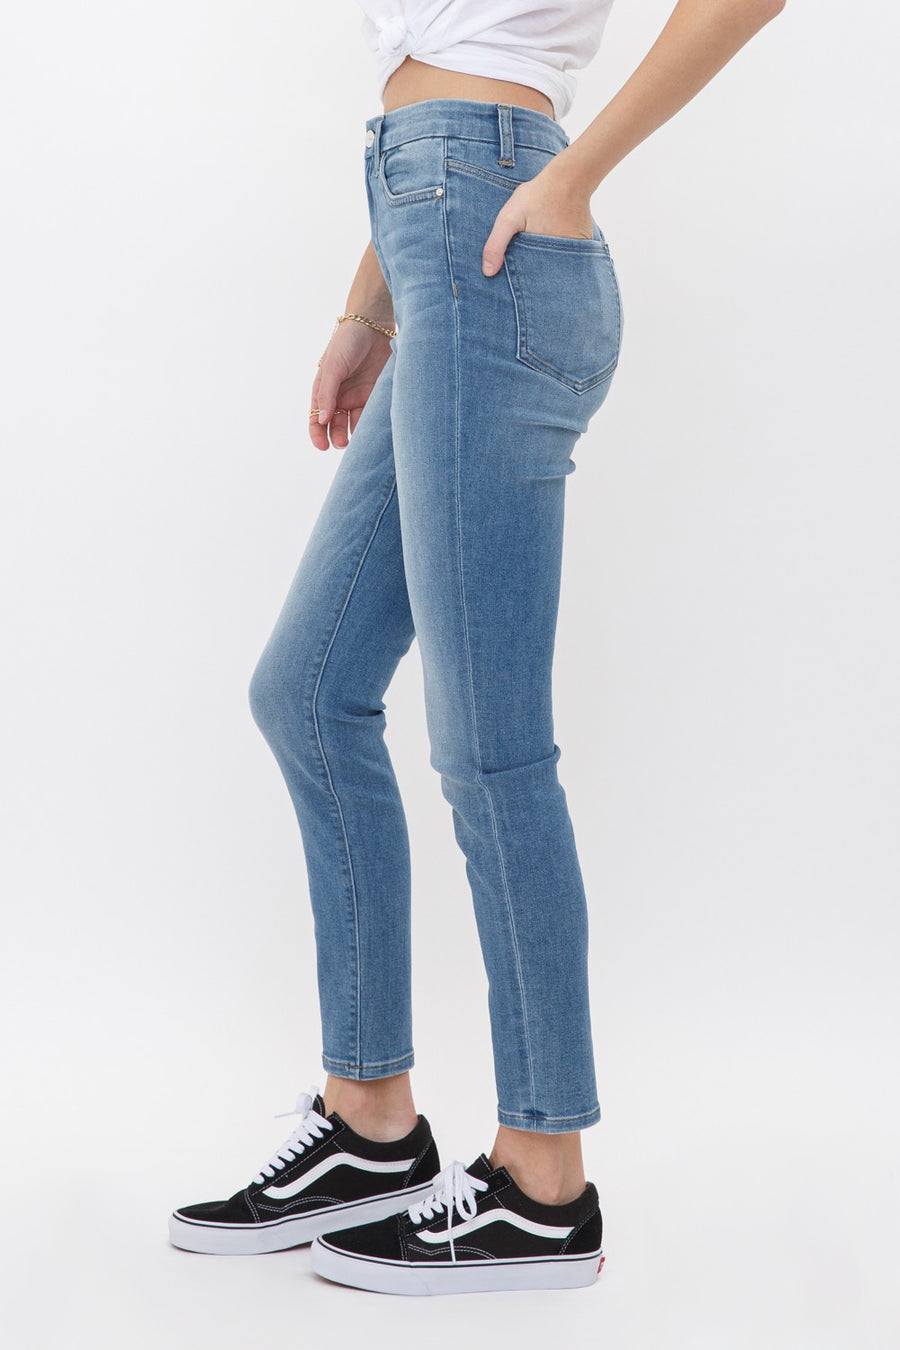 MDP-S130 Mica Denim High Rish Ankle Skinny Jeans *FINAL SALE*